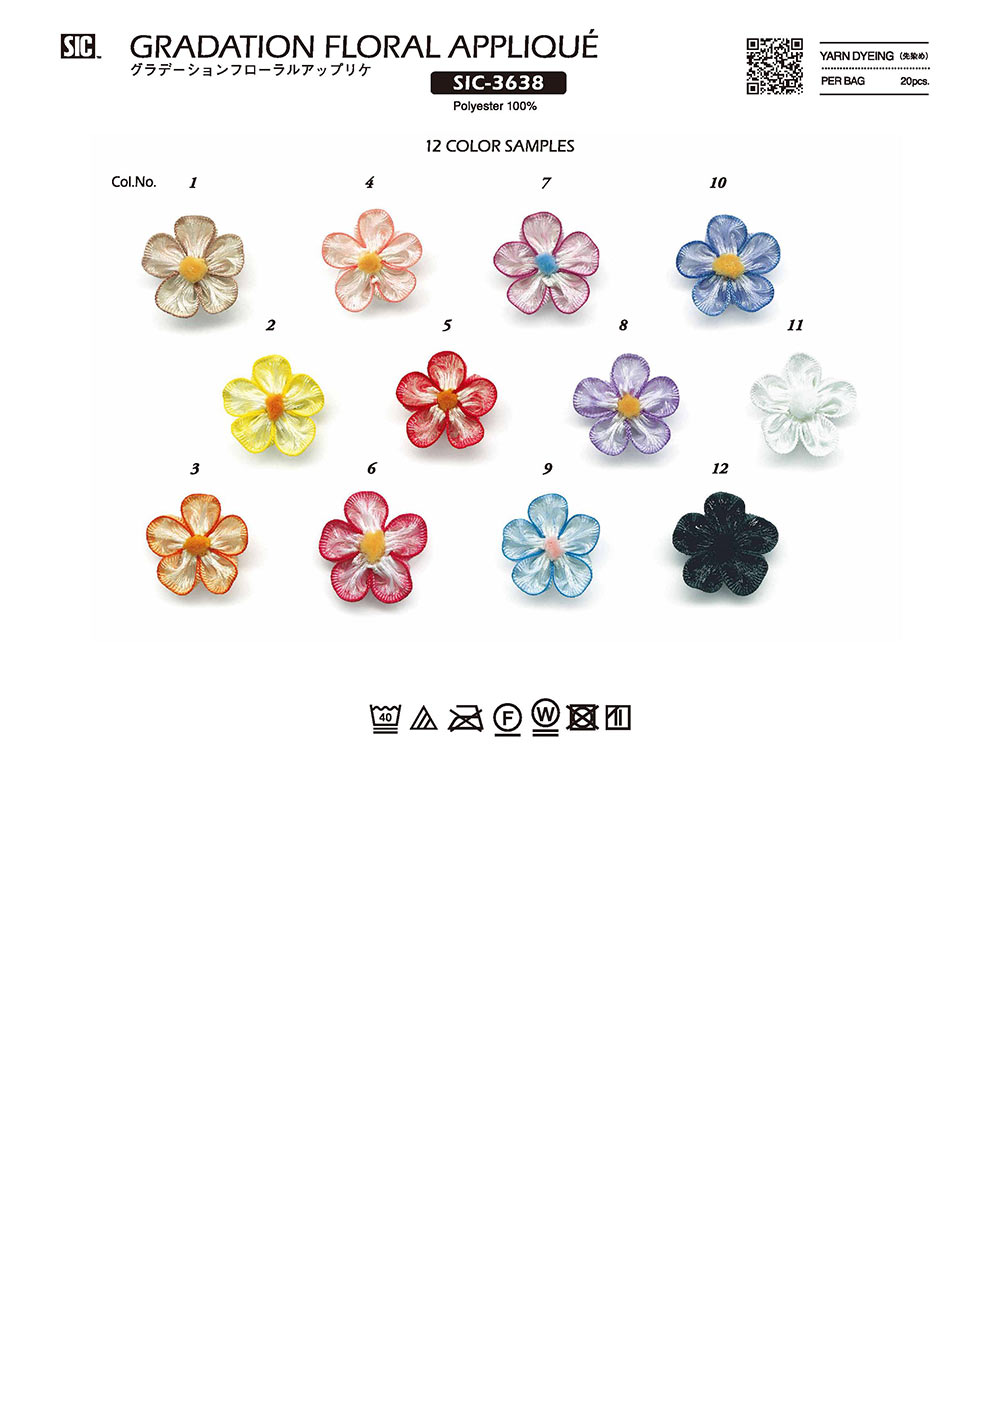 SIC-3638 Gradient Floral Applique[Produtos Diversos E Outros] SHINDO(SIC)